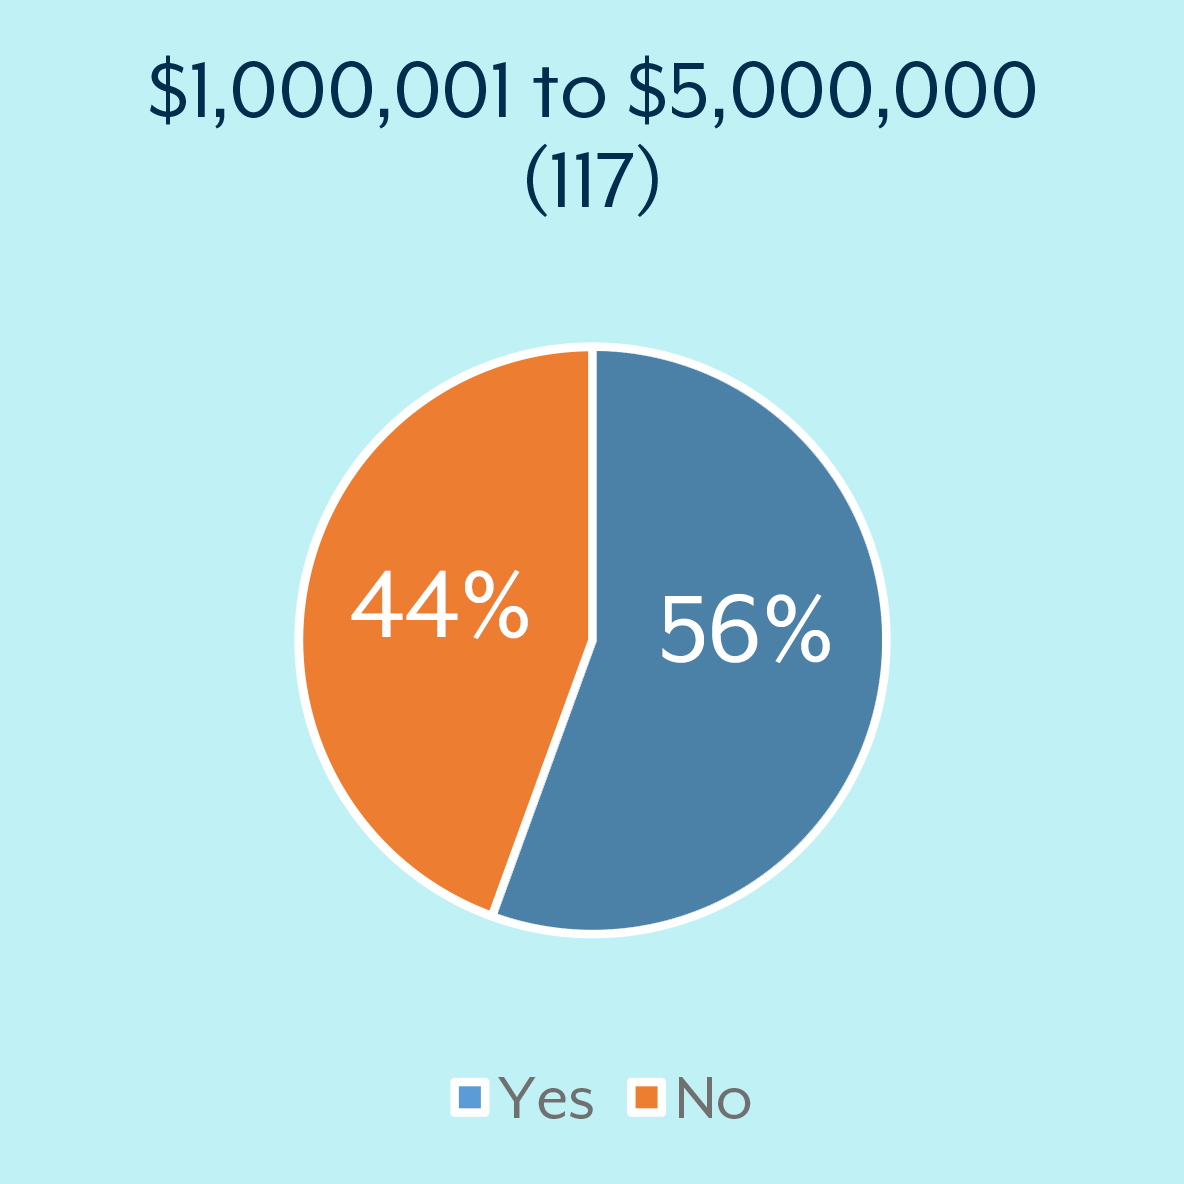 $1 million to $5 million: Yes = 56% No = 44%